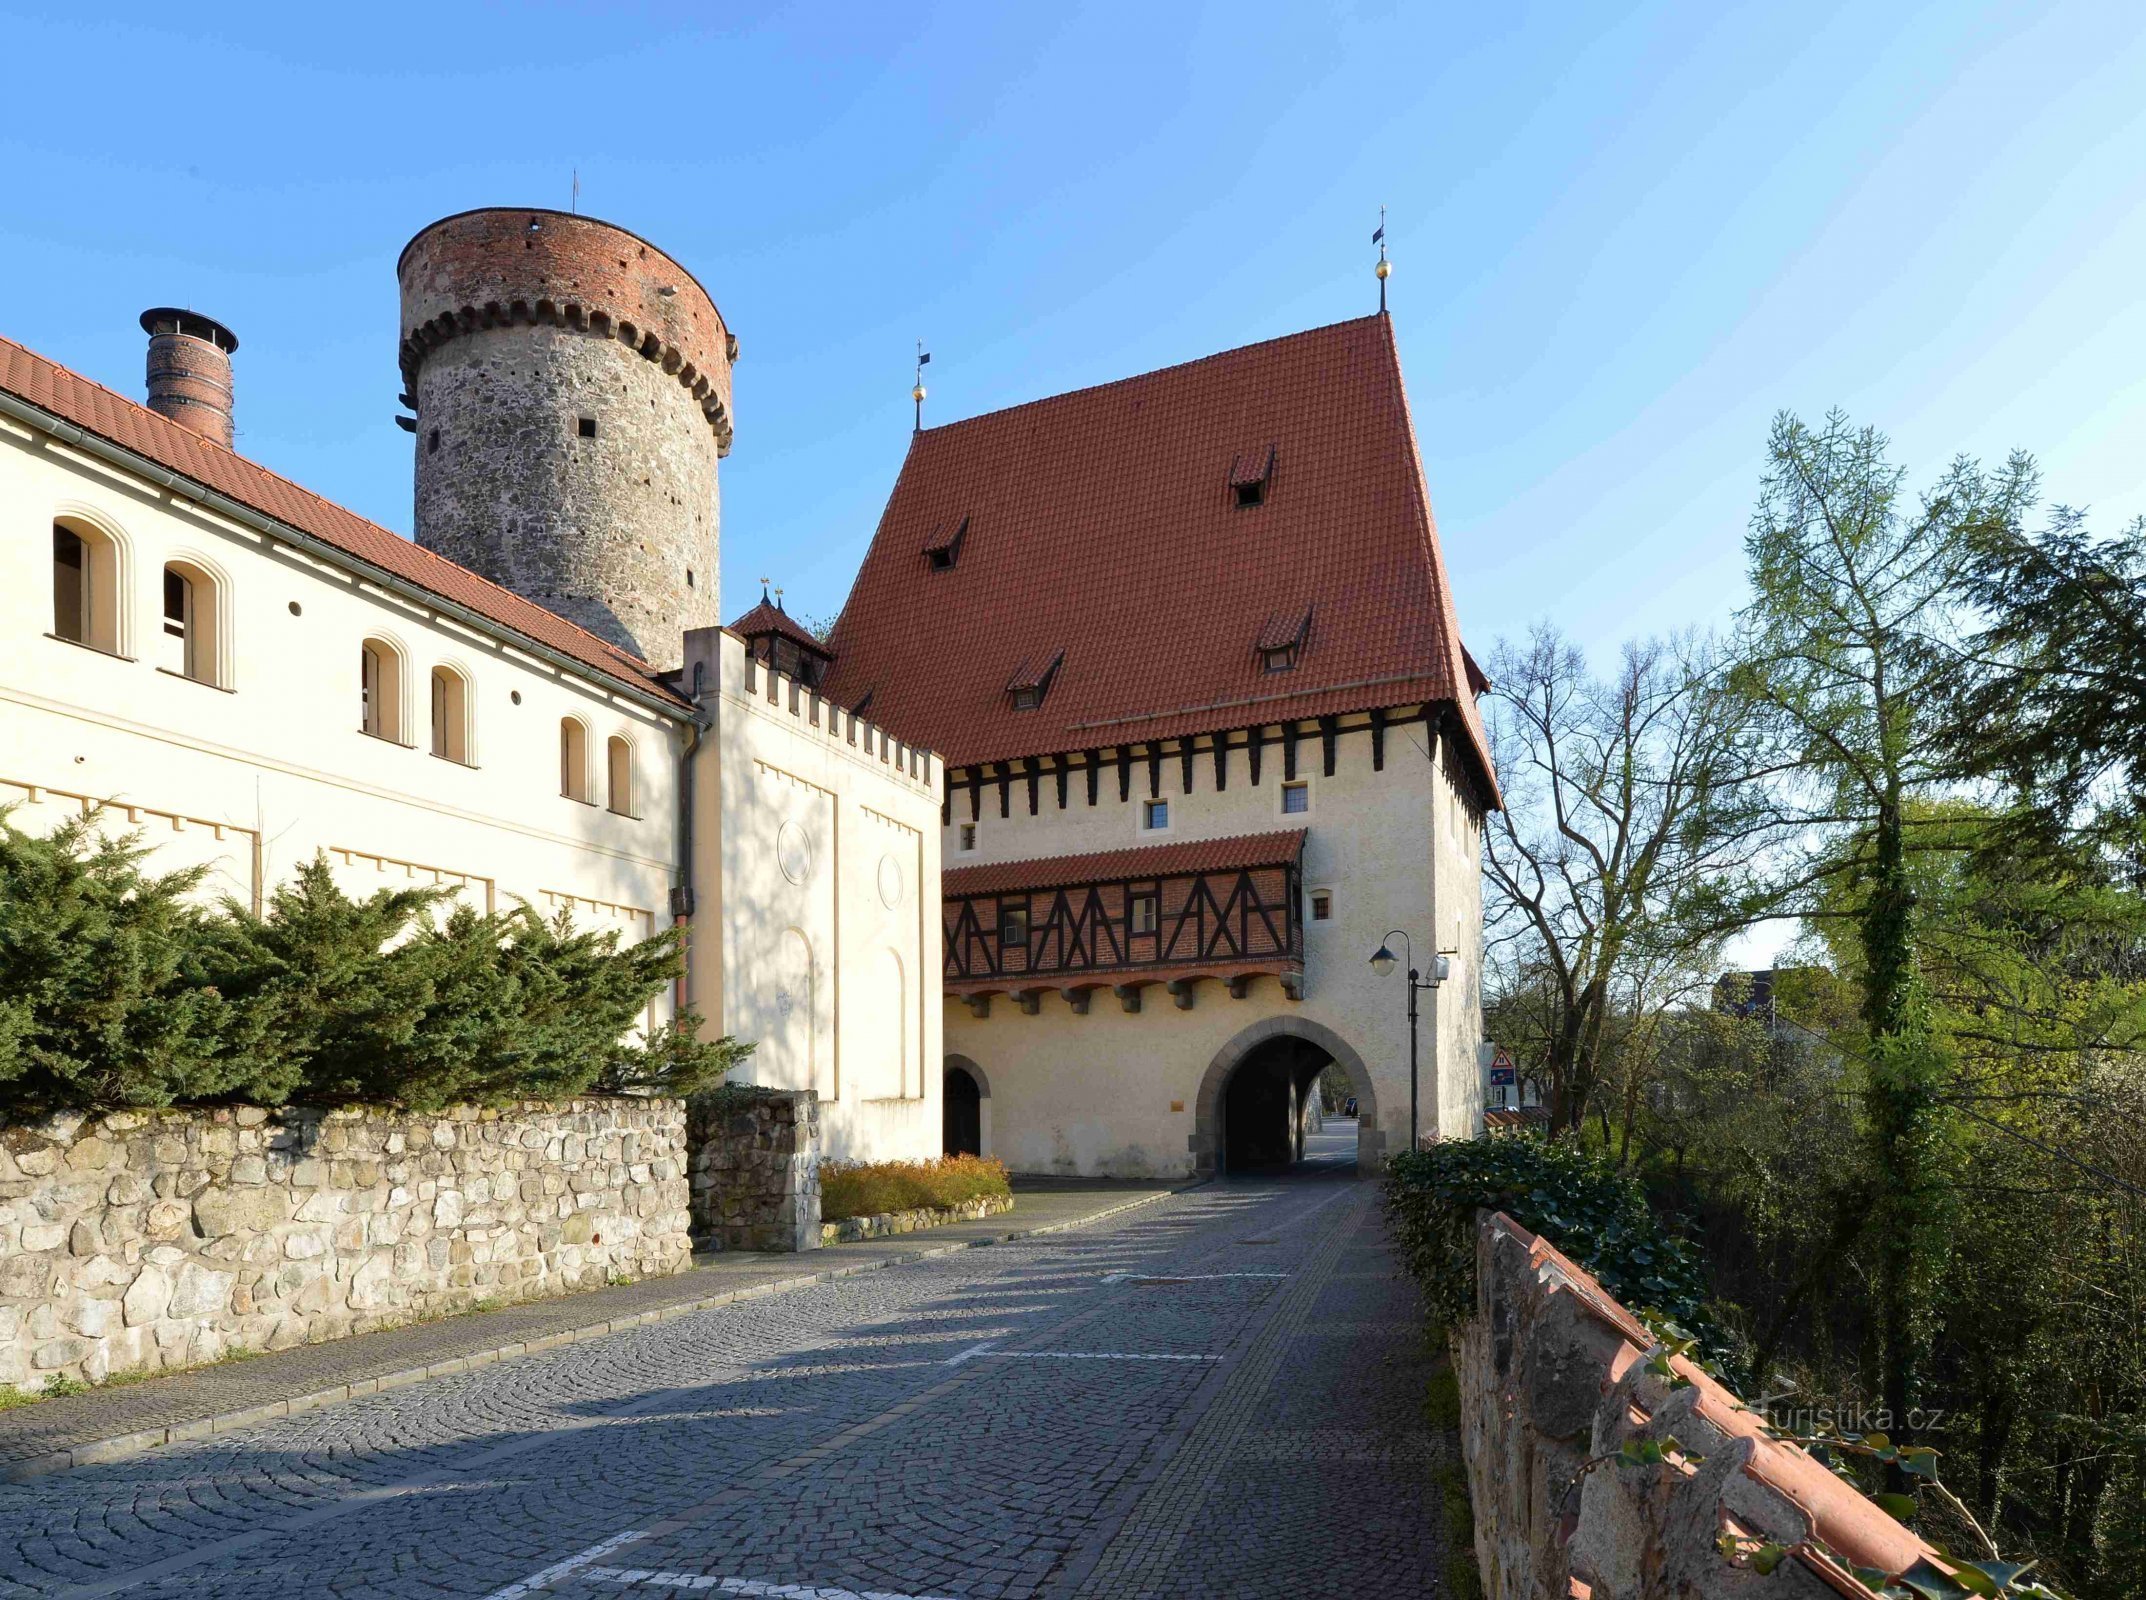 Turnul Kotnov și Poarta Bechyňská - unul dintre cele mai vechi monumente din Tábor